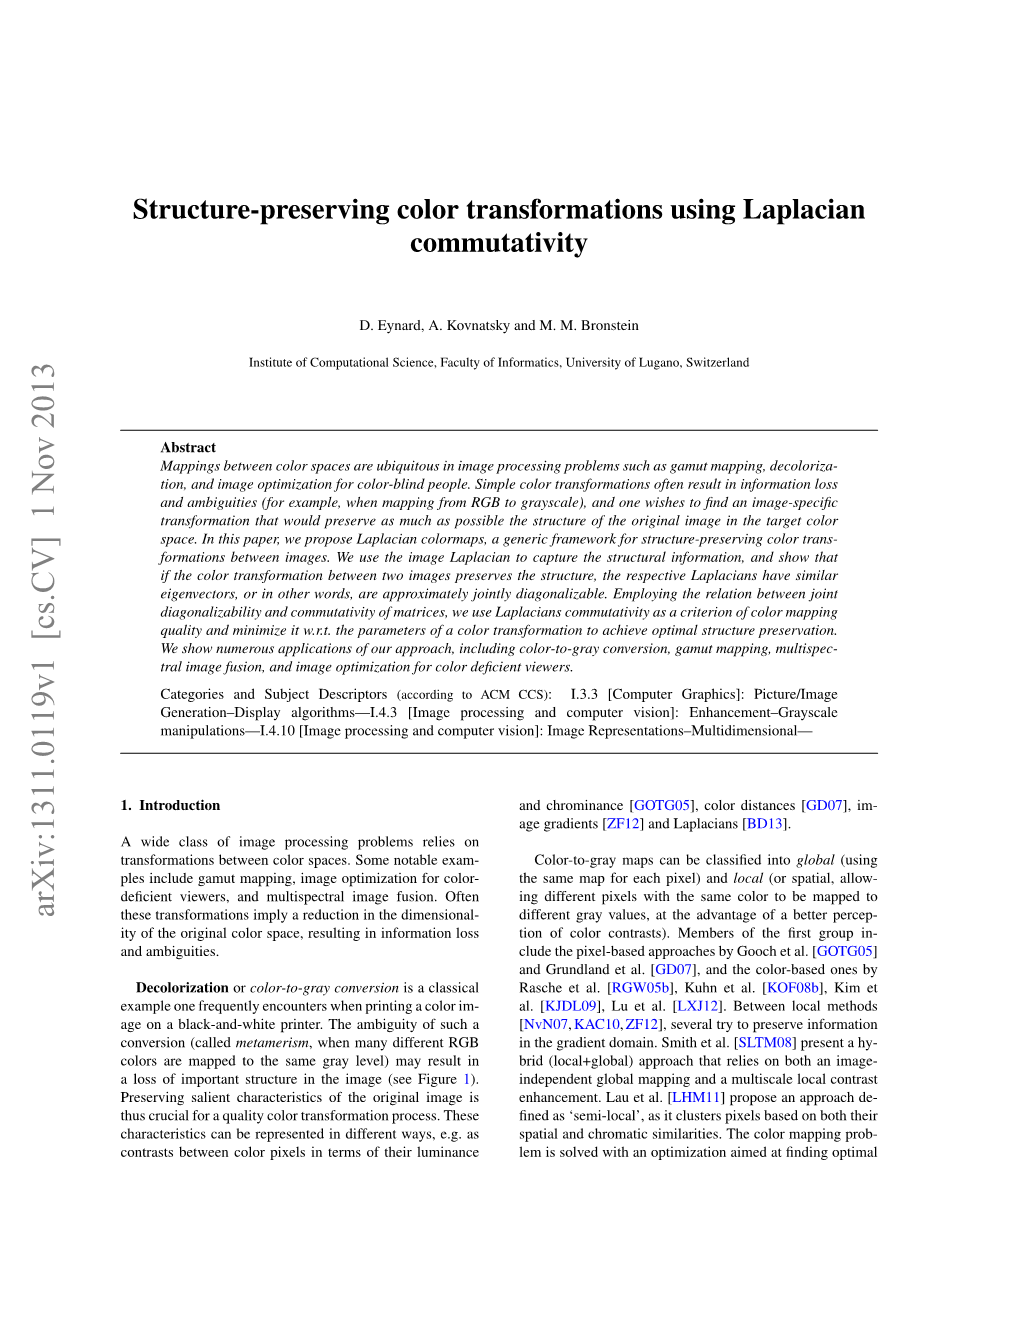 Structure-Preserving Color Transformations Using Laplacian Commutativity